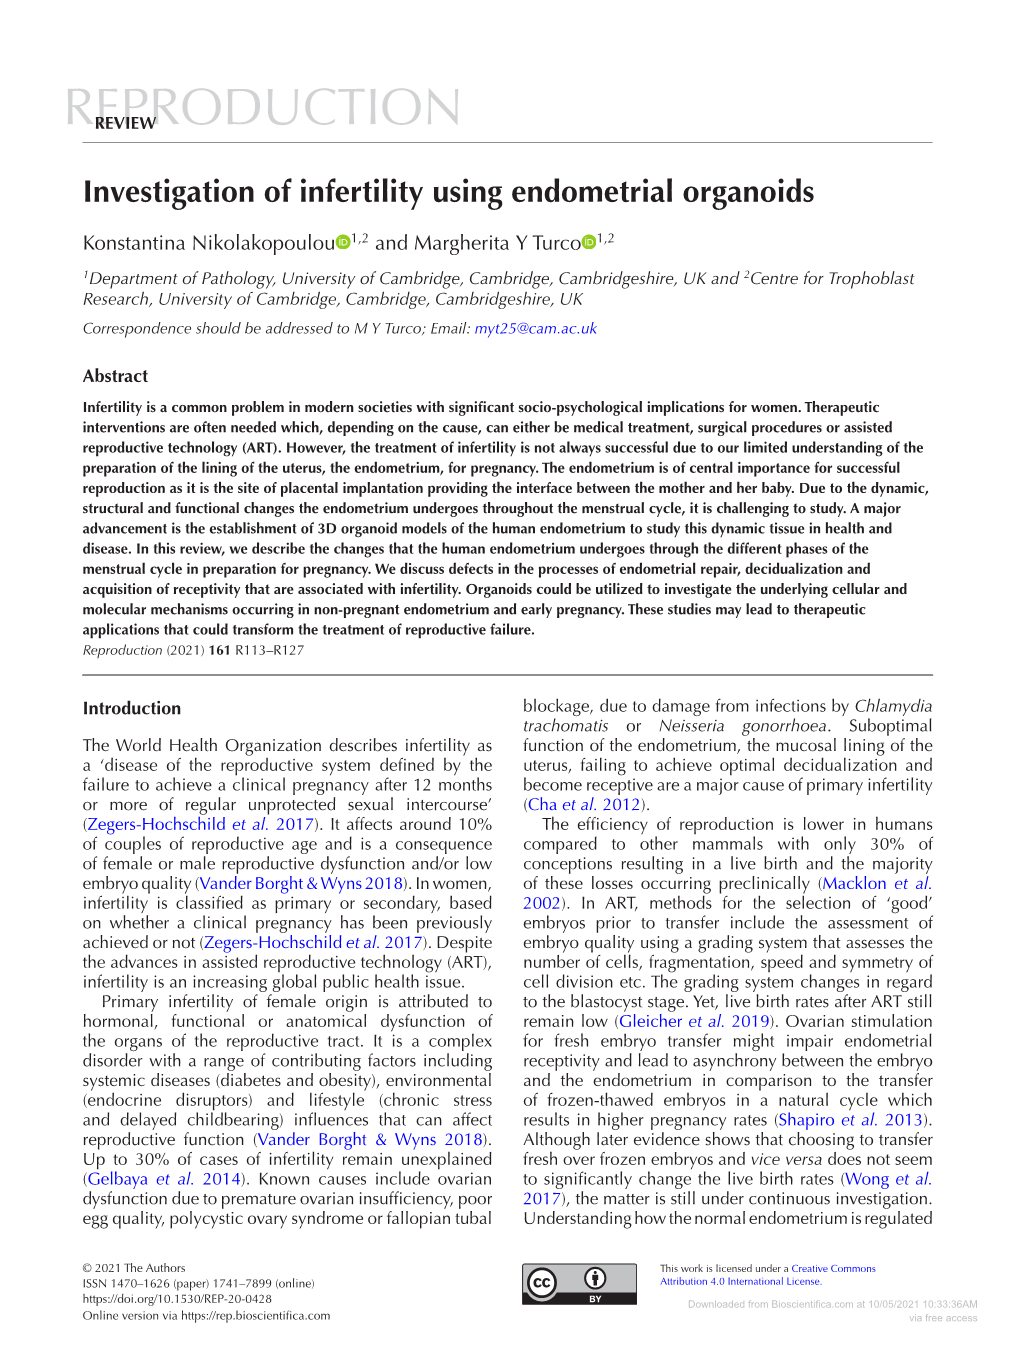 Investigation of Infertility Using Endometrial Organoids